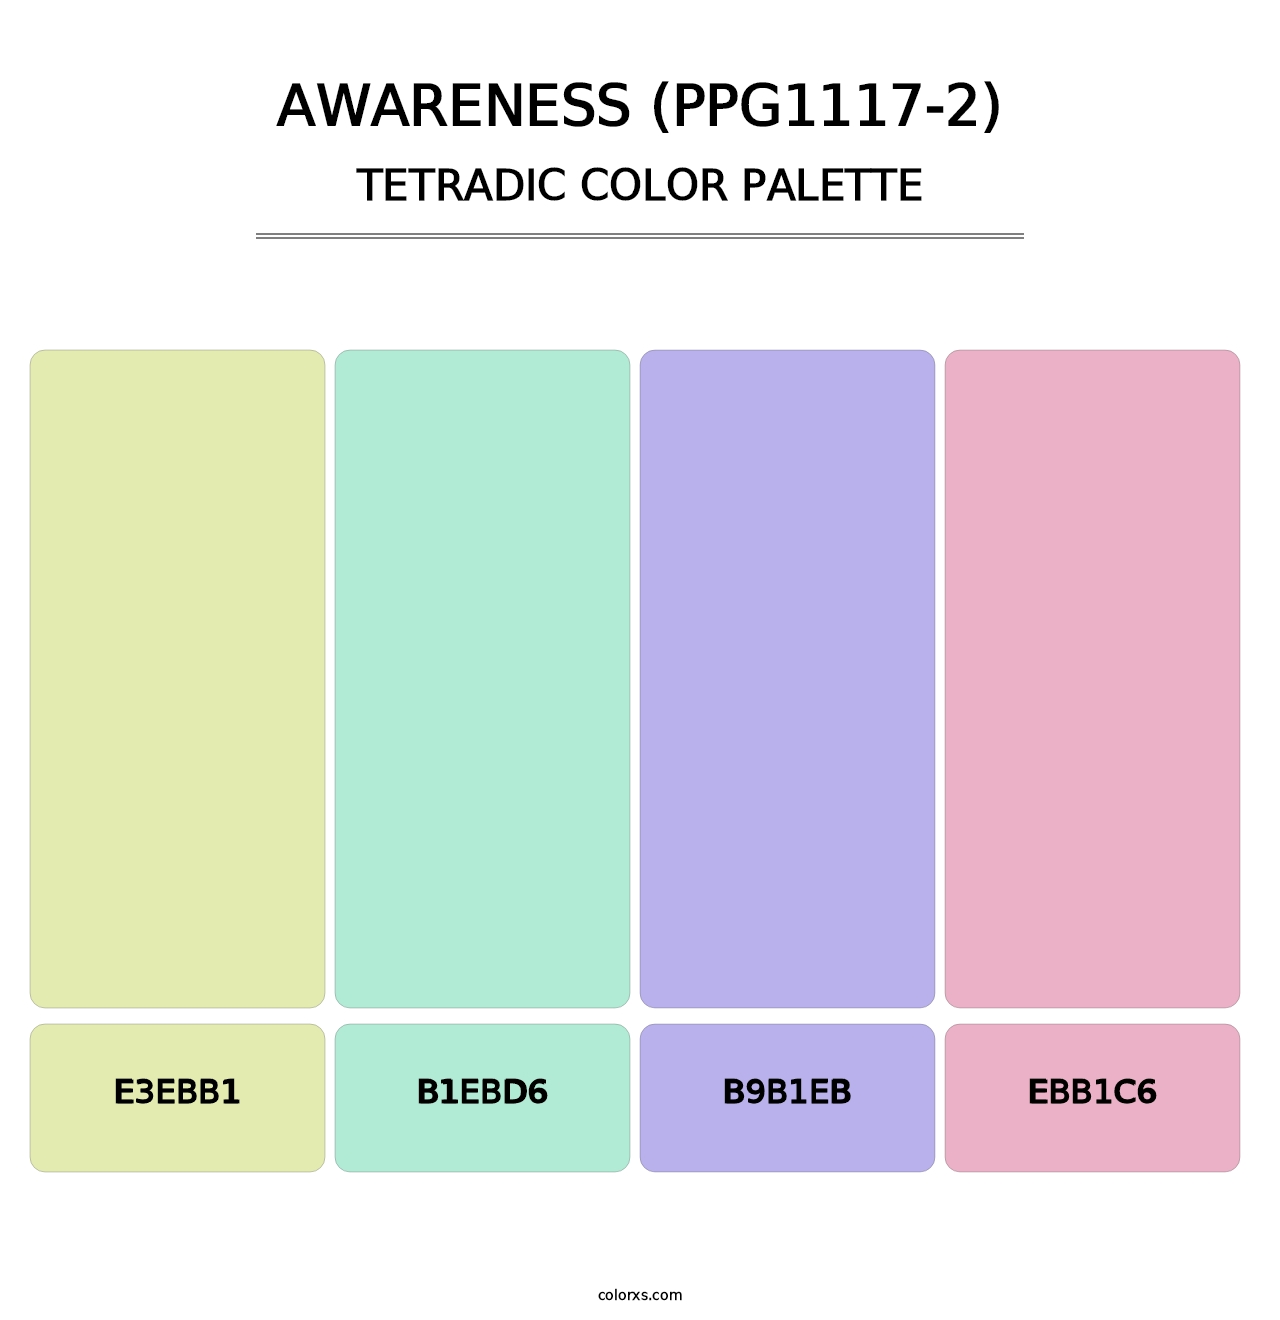 Awareness (PPG1117-2) - Tetradic Color Palette